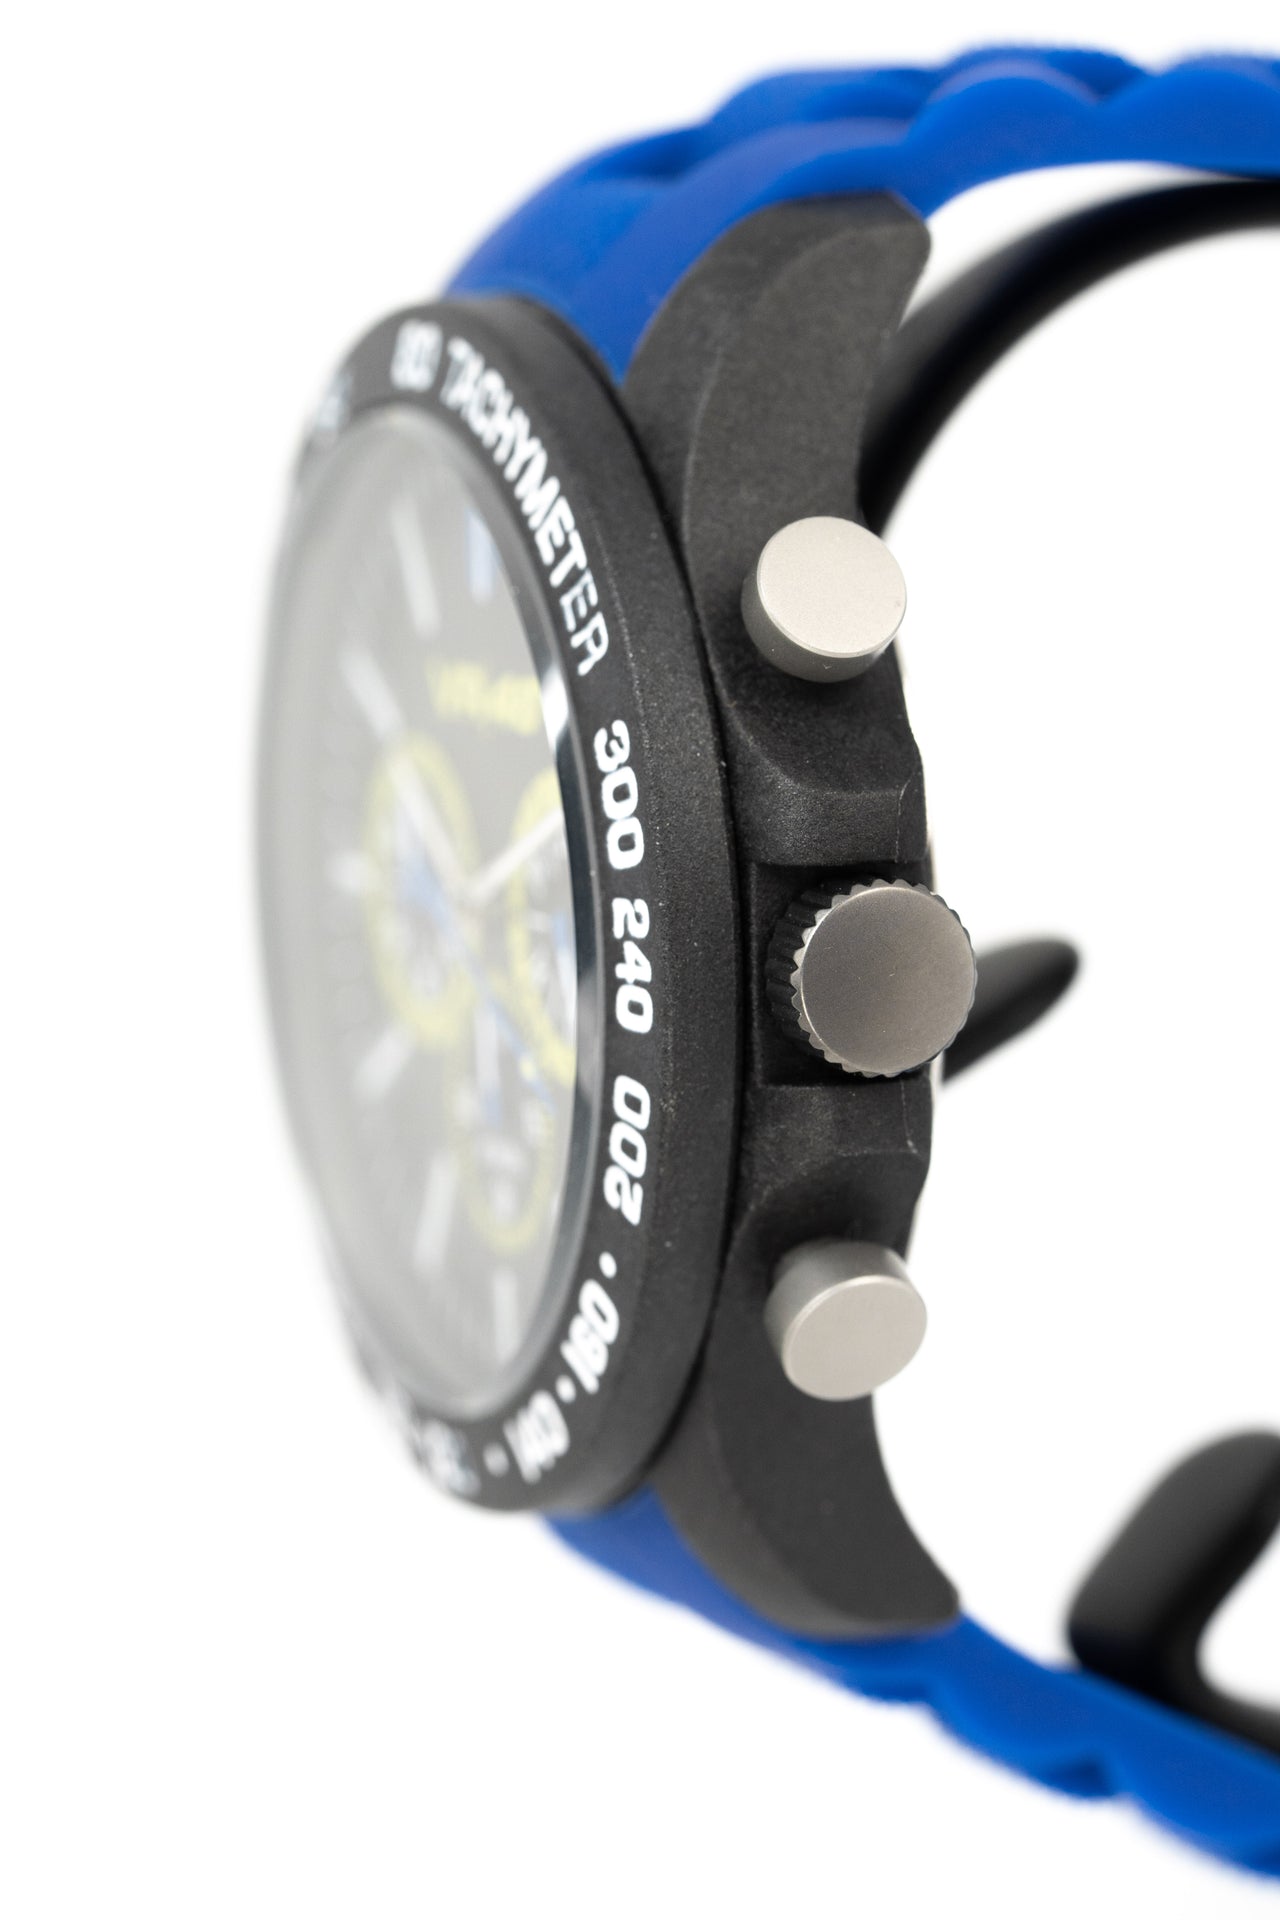 TW Steel Chronograph Watch VR/46 Blue VR110